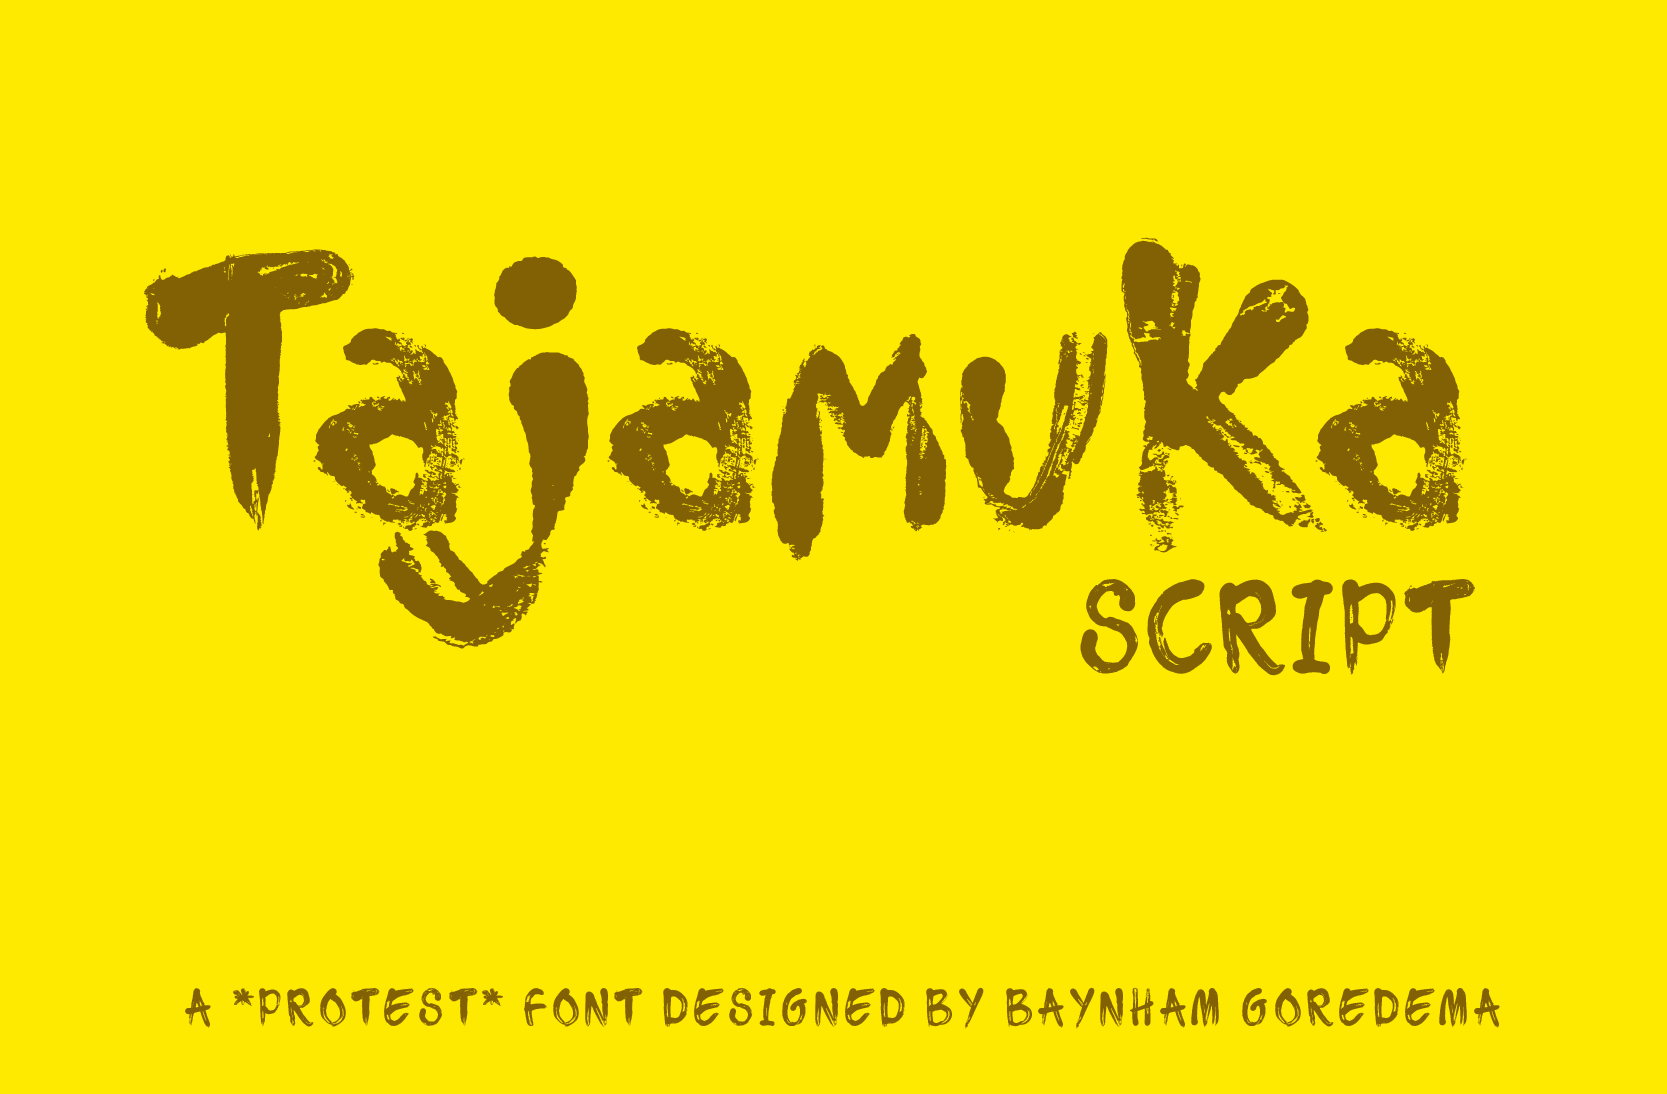 Tajamuka Script